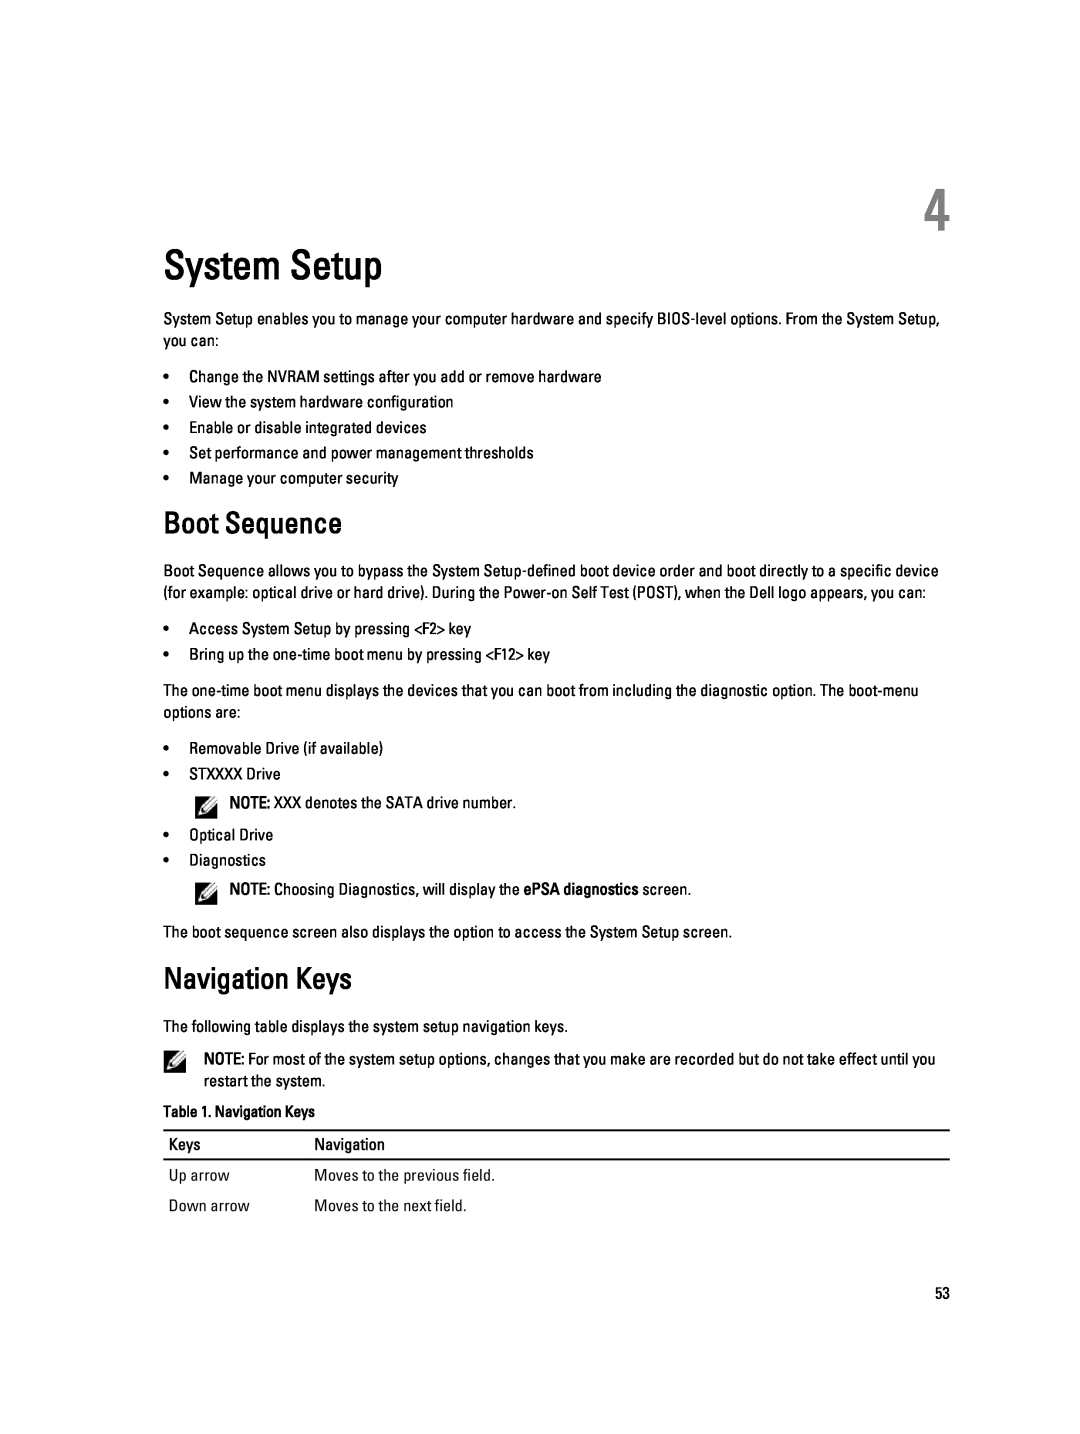 Dell T7610 owner manual System Setup, Boot Sequence, Navigation Keys 